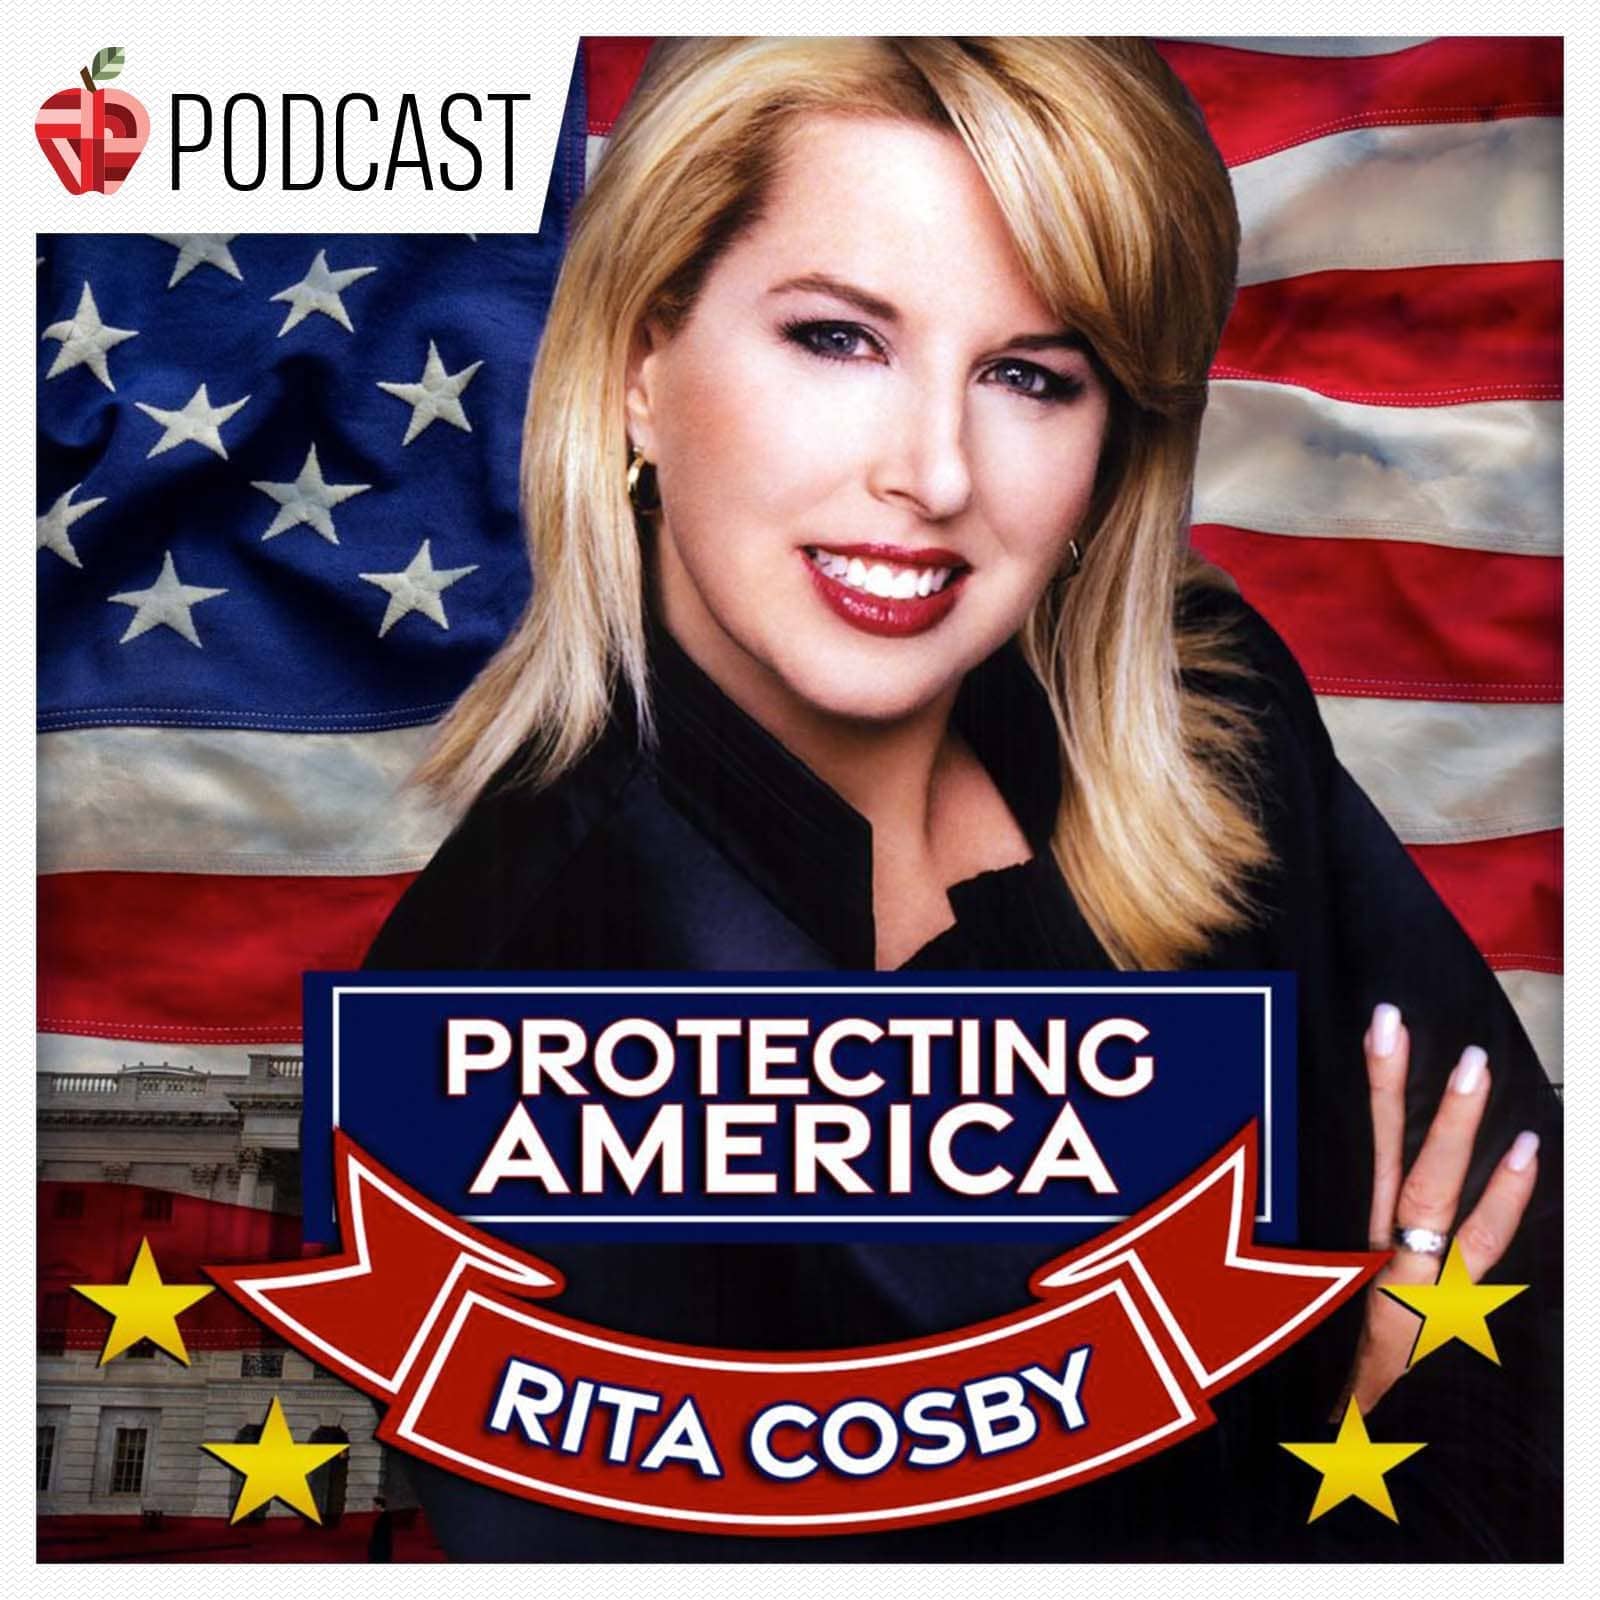 rita-cosby-protecting-america-correct-podcast-new-logo597499